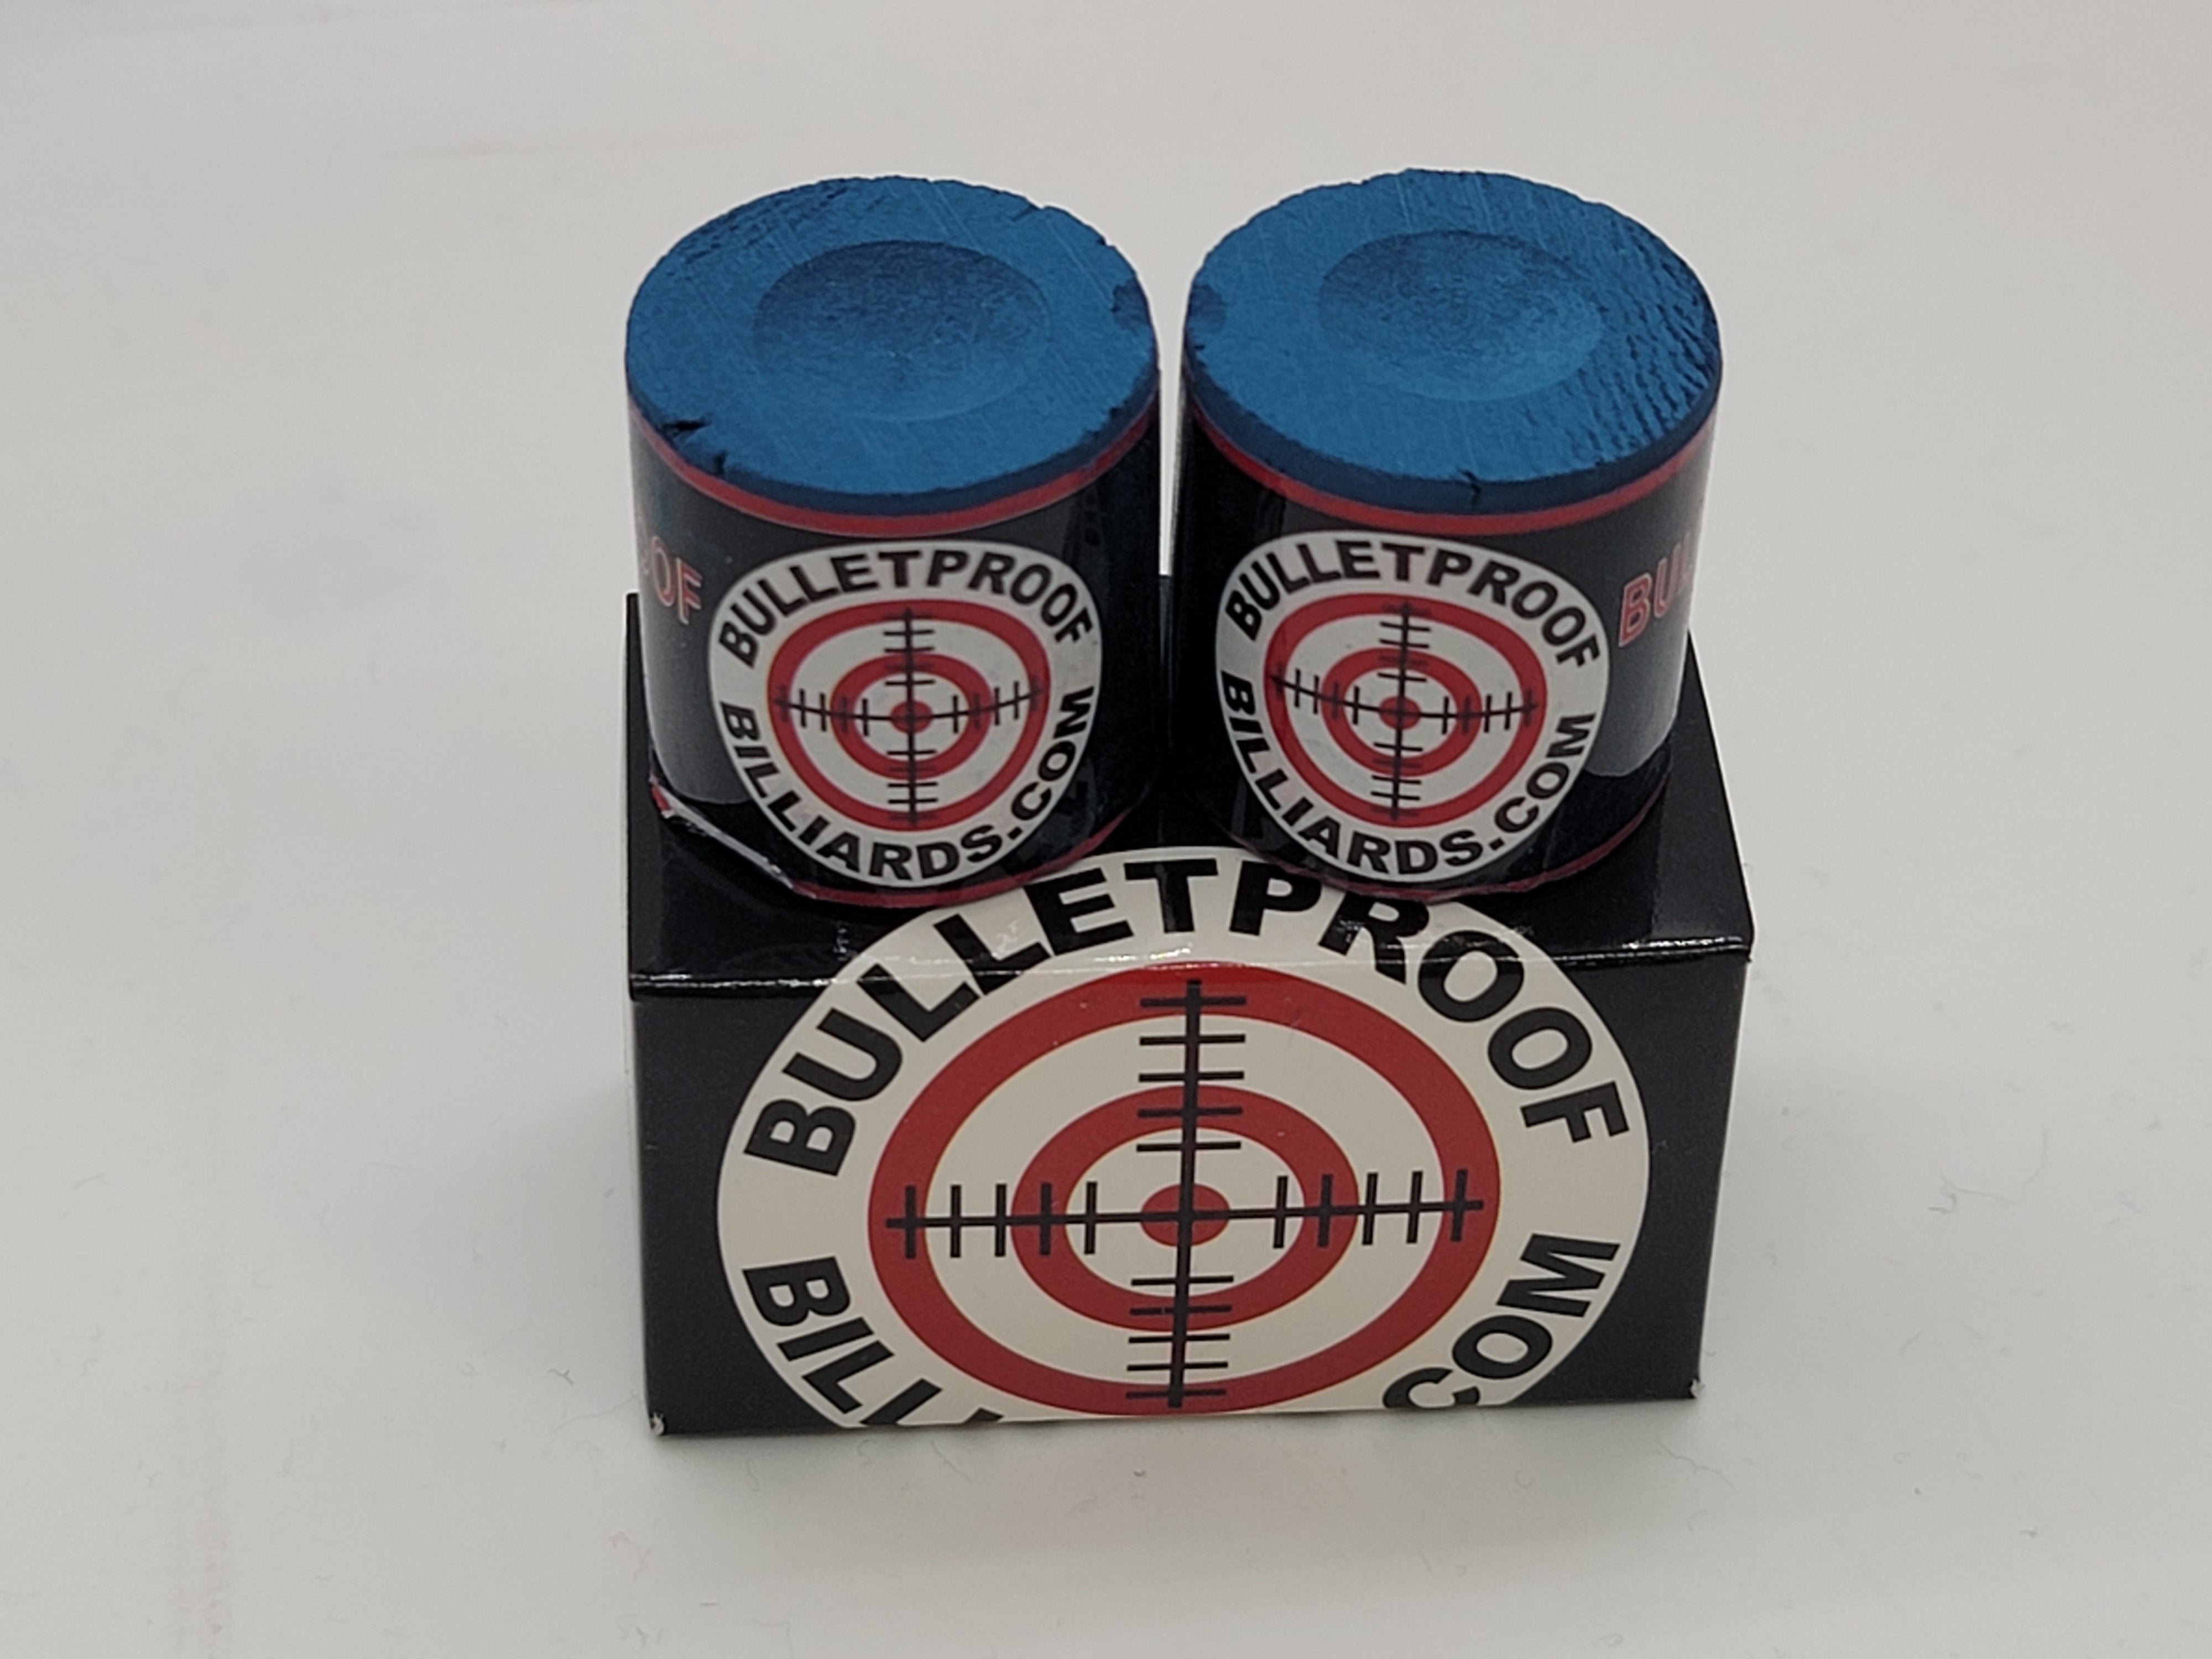 Bulletproof "Double Barrel" Premium Chalk